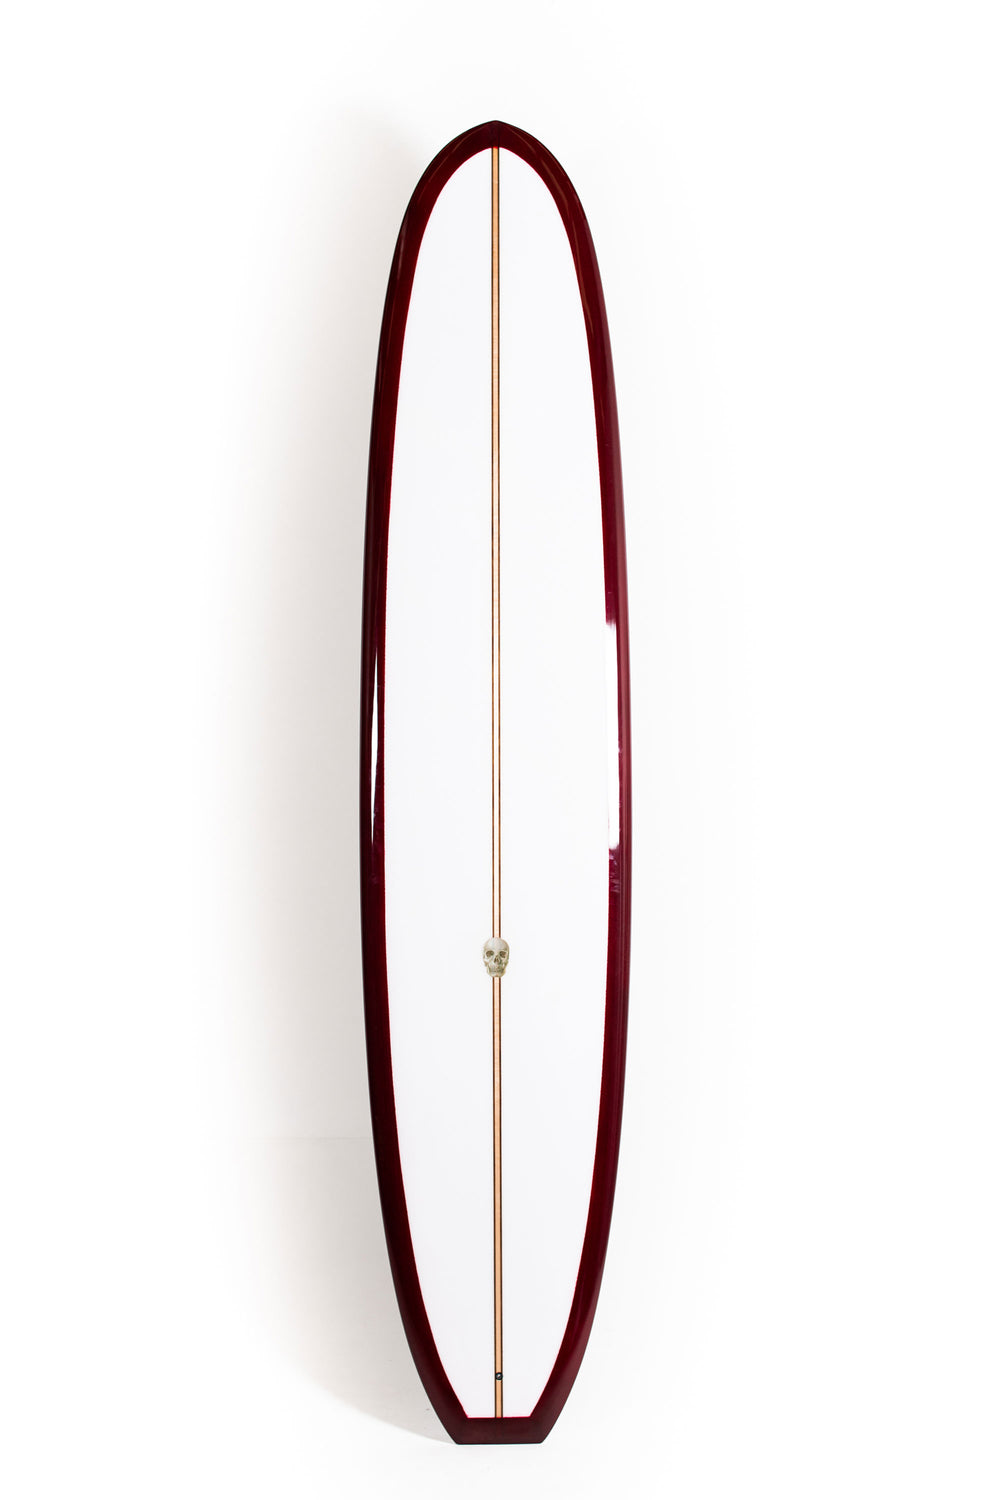 Pukas Surf Shop - Christenson Surfboard  - SCARLET BEGONIA by Chris Christenson - 9'3” x 23